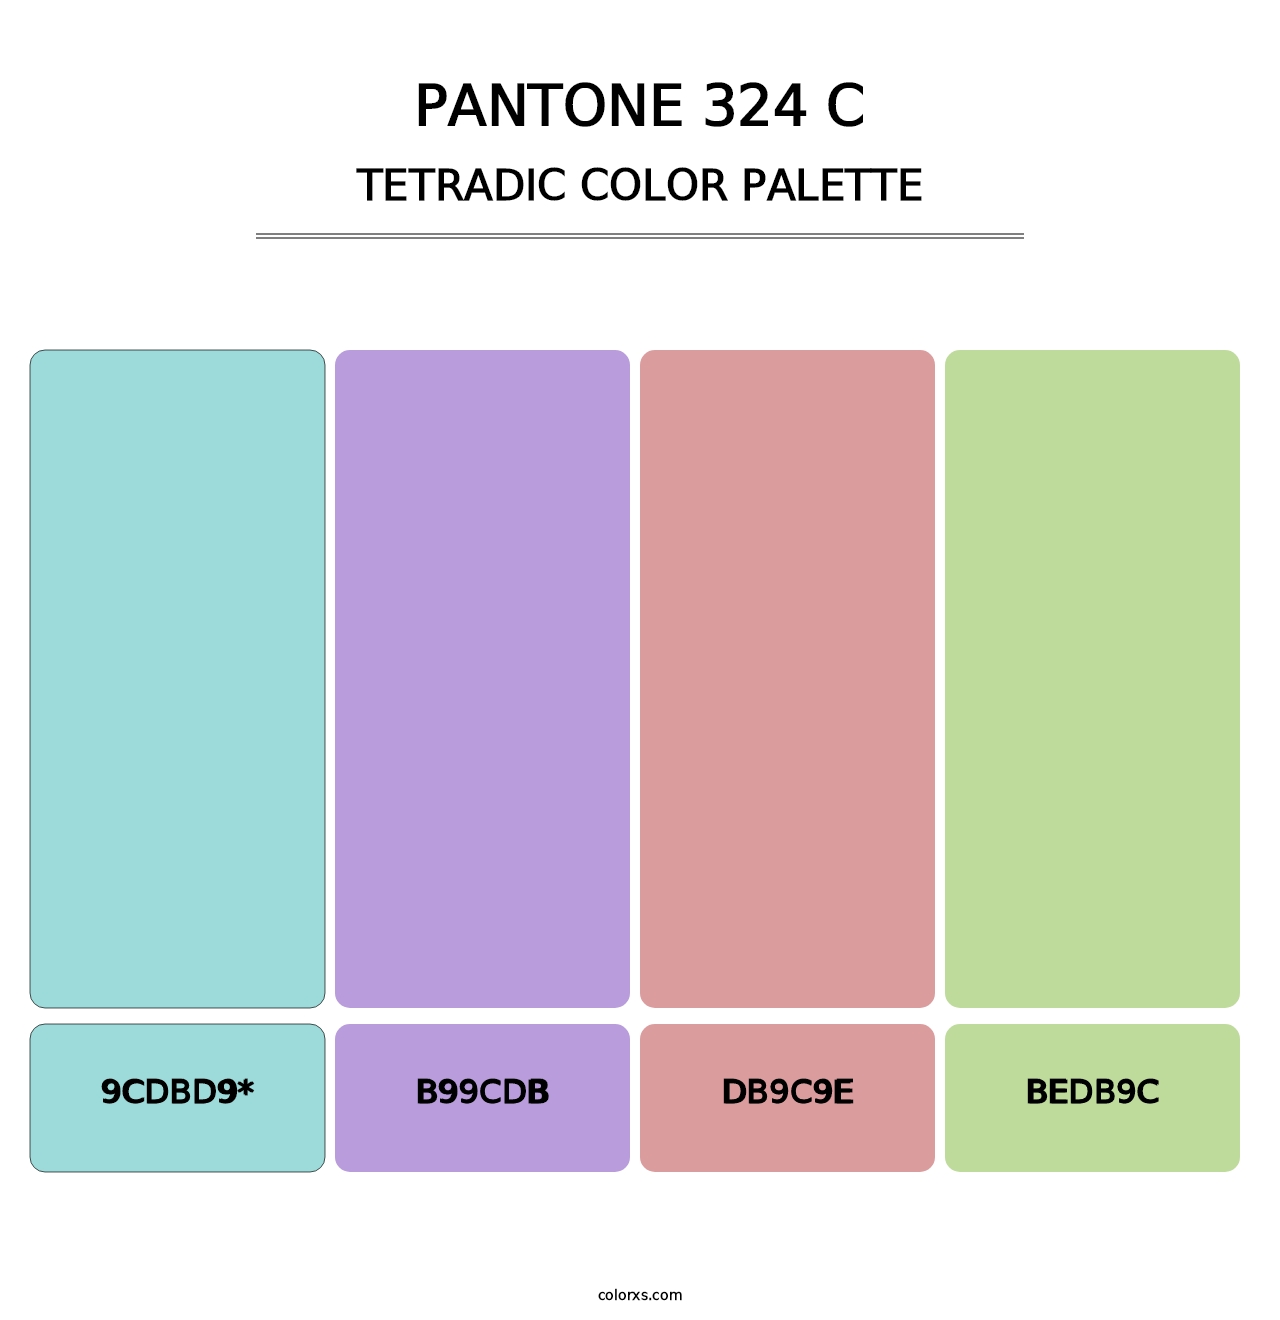 PANTONE 324 C - Tetradic Color Palette